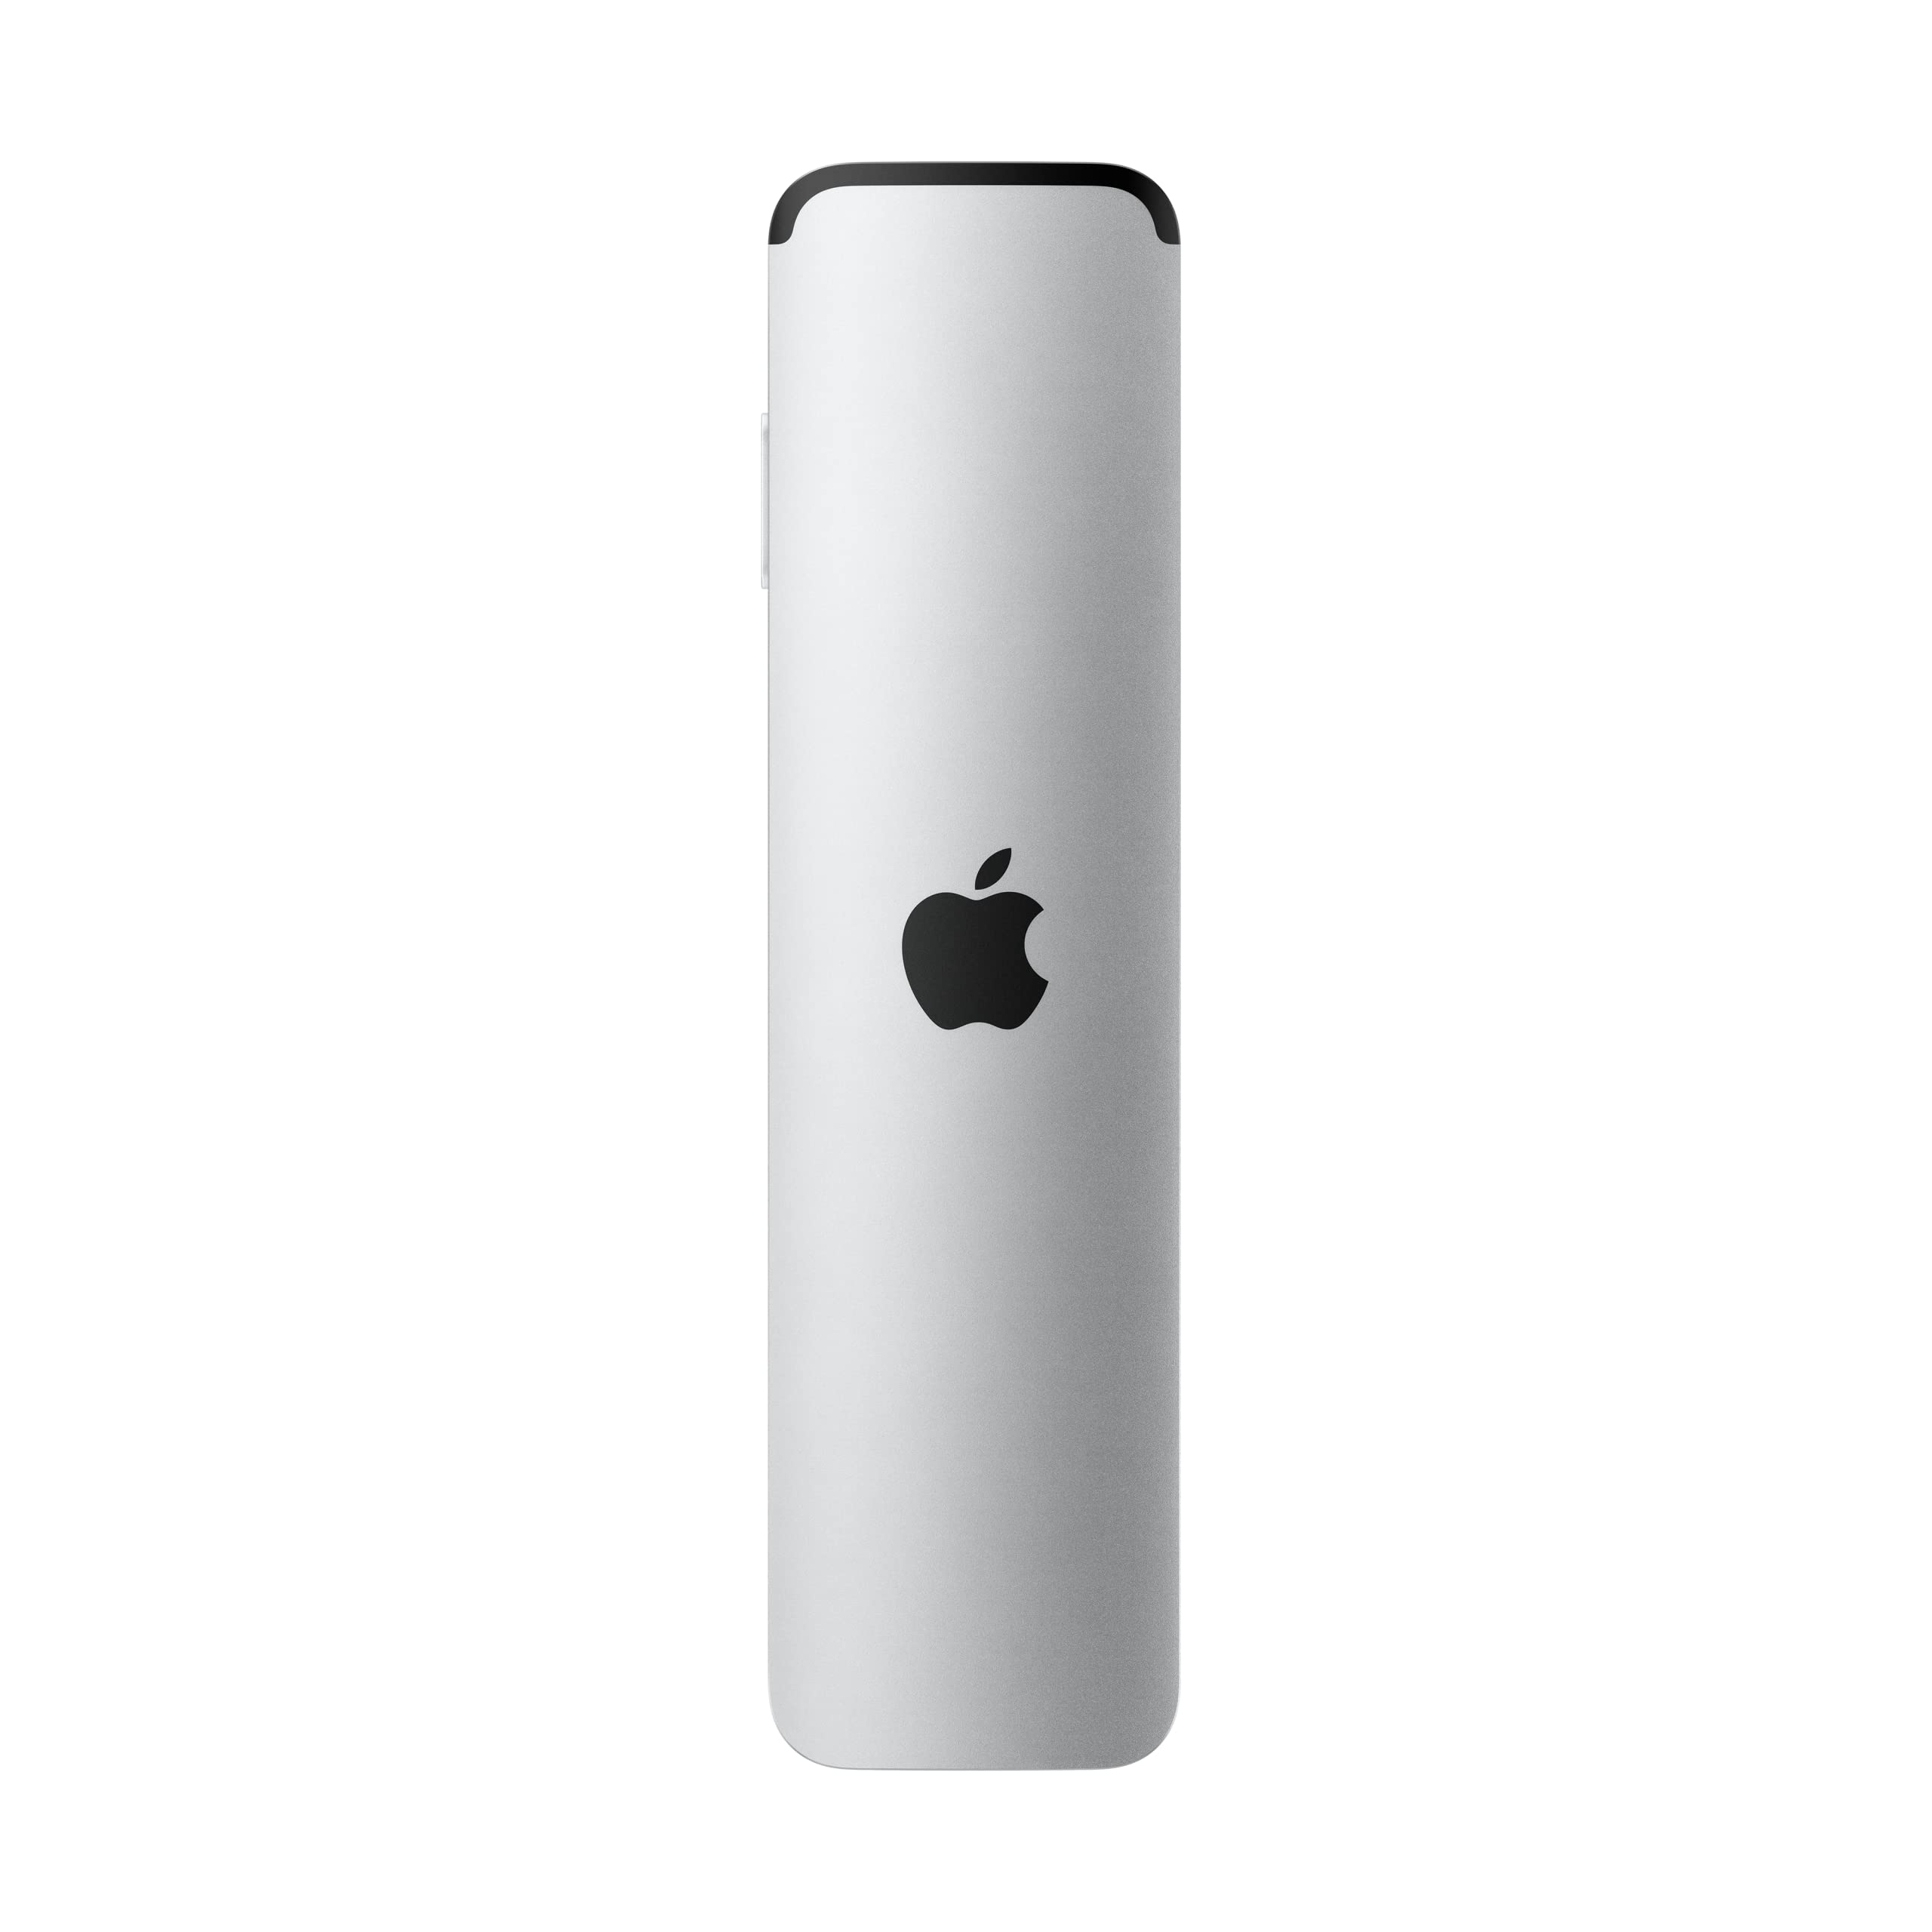 Apple TV Siri Remote (3rd Generation)